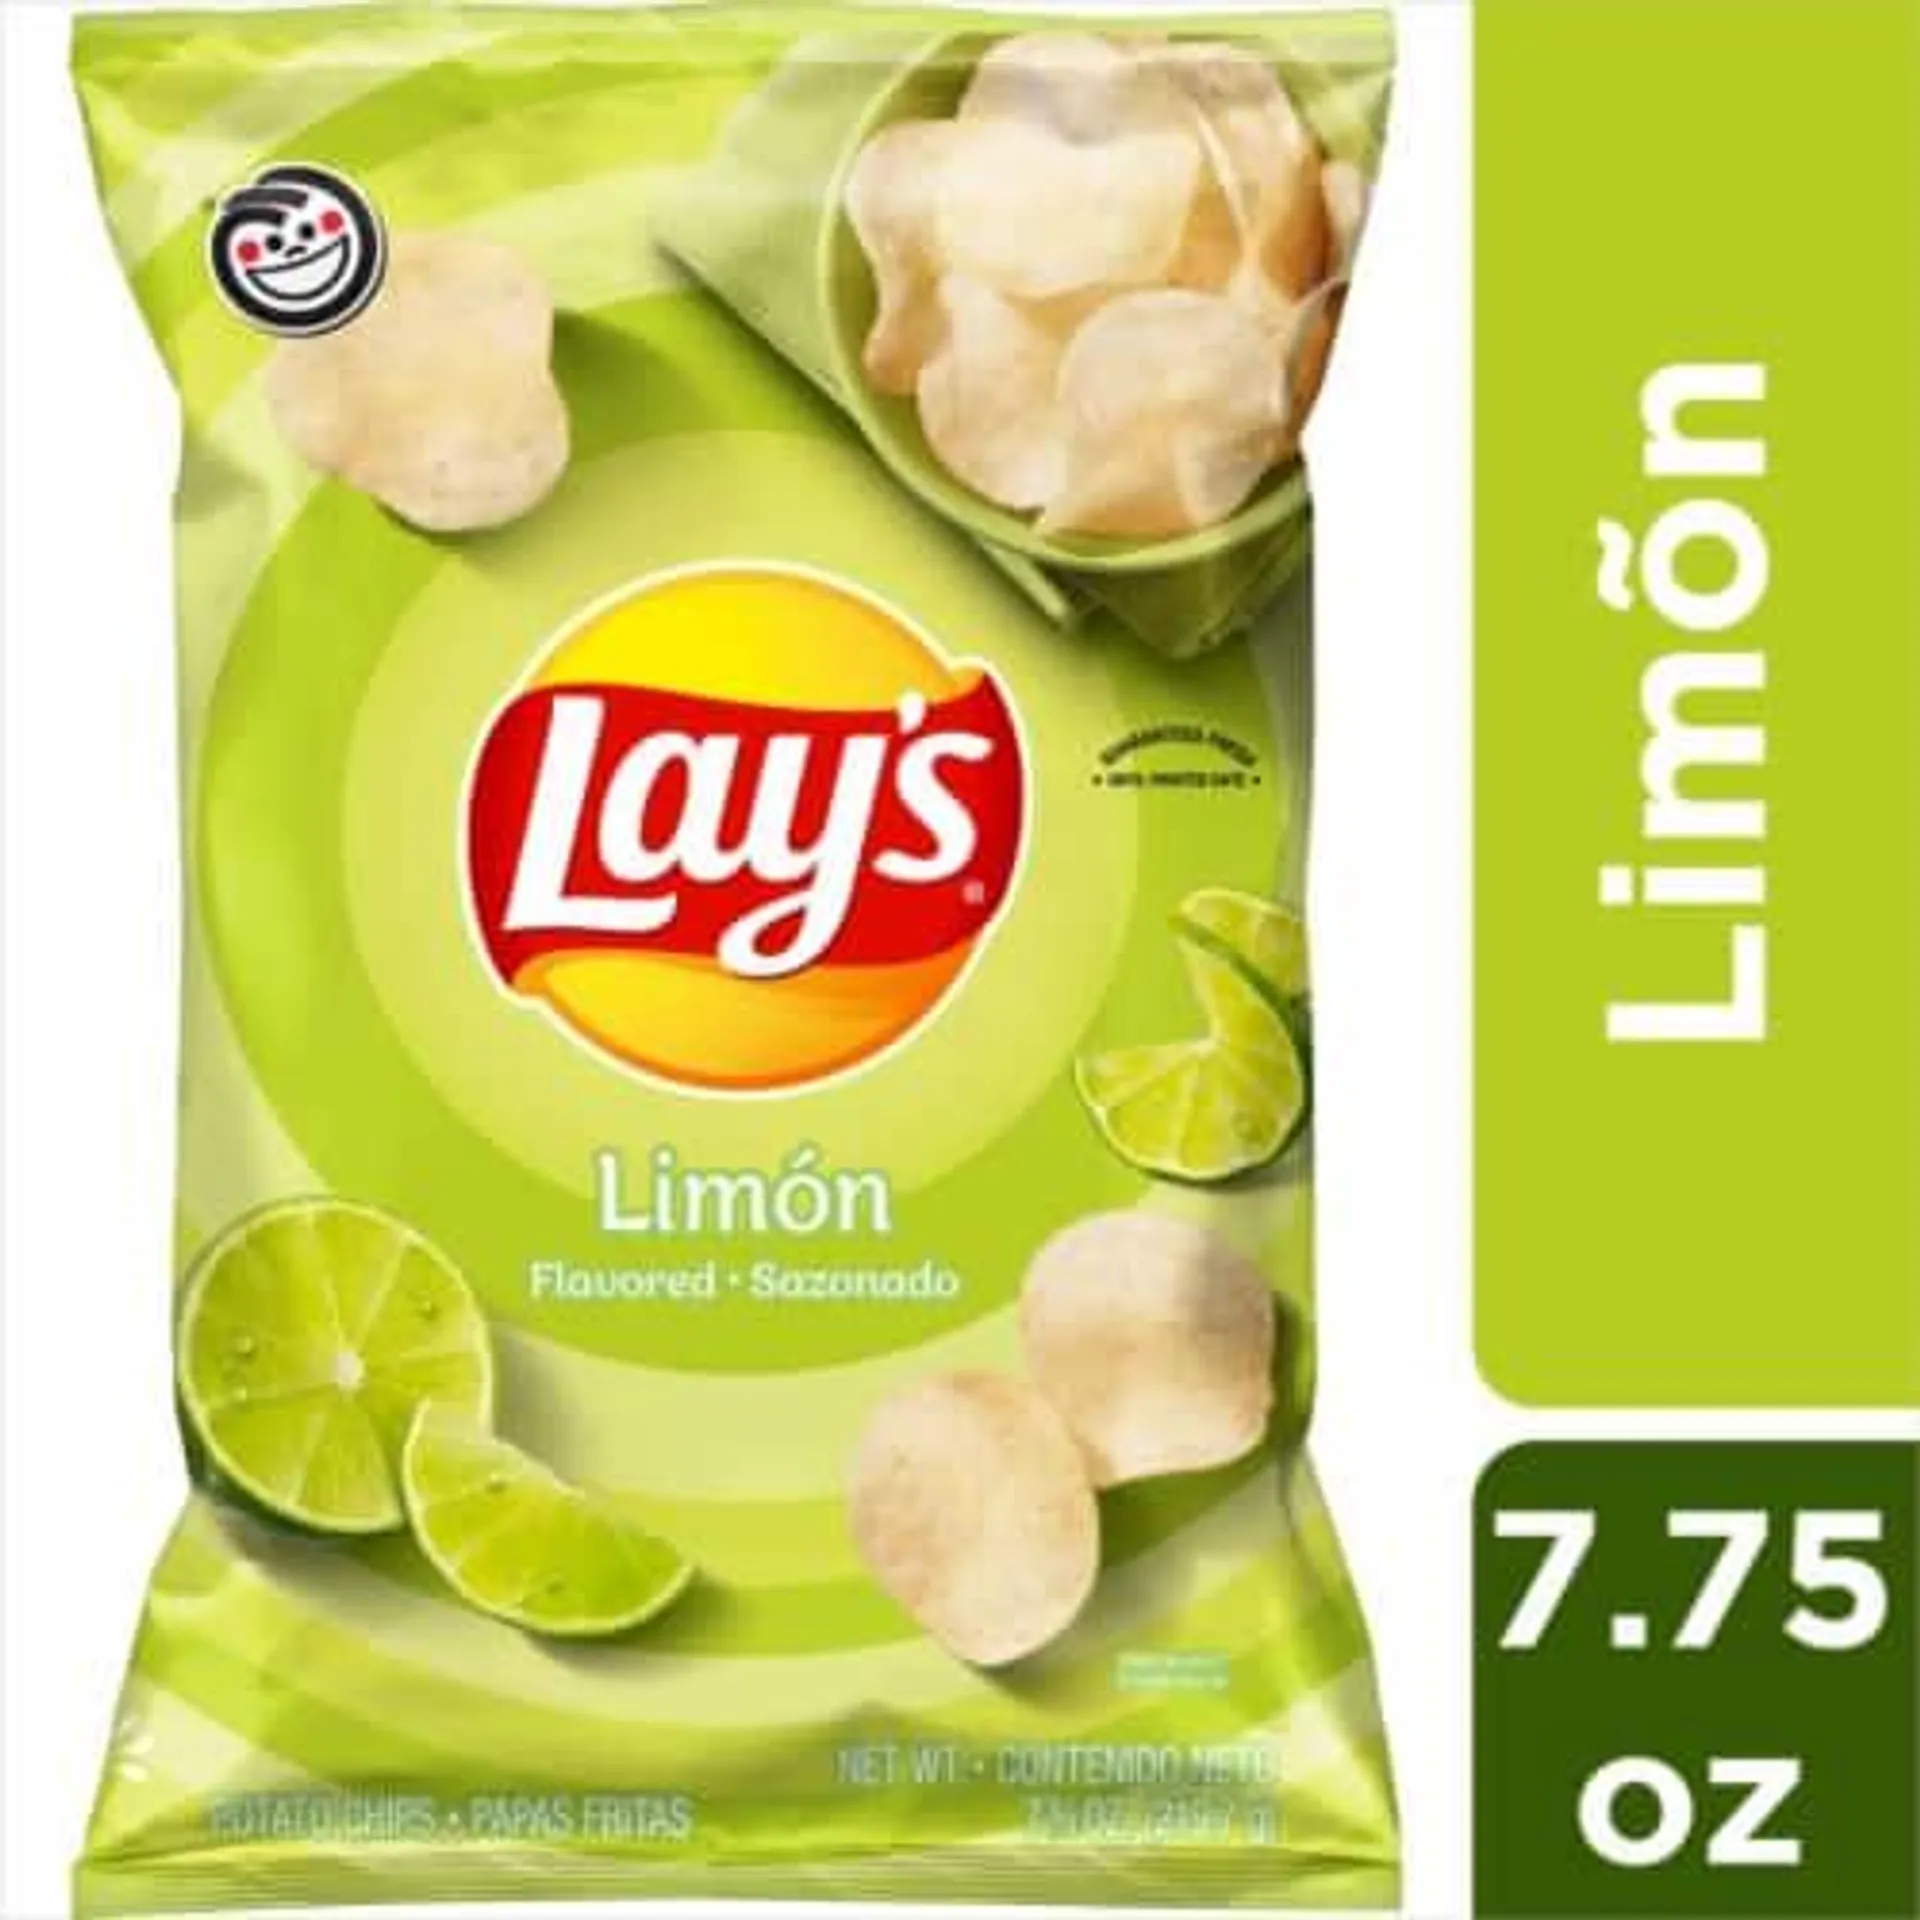 Lay's® Limon Potato Chips